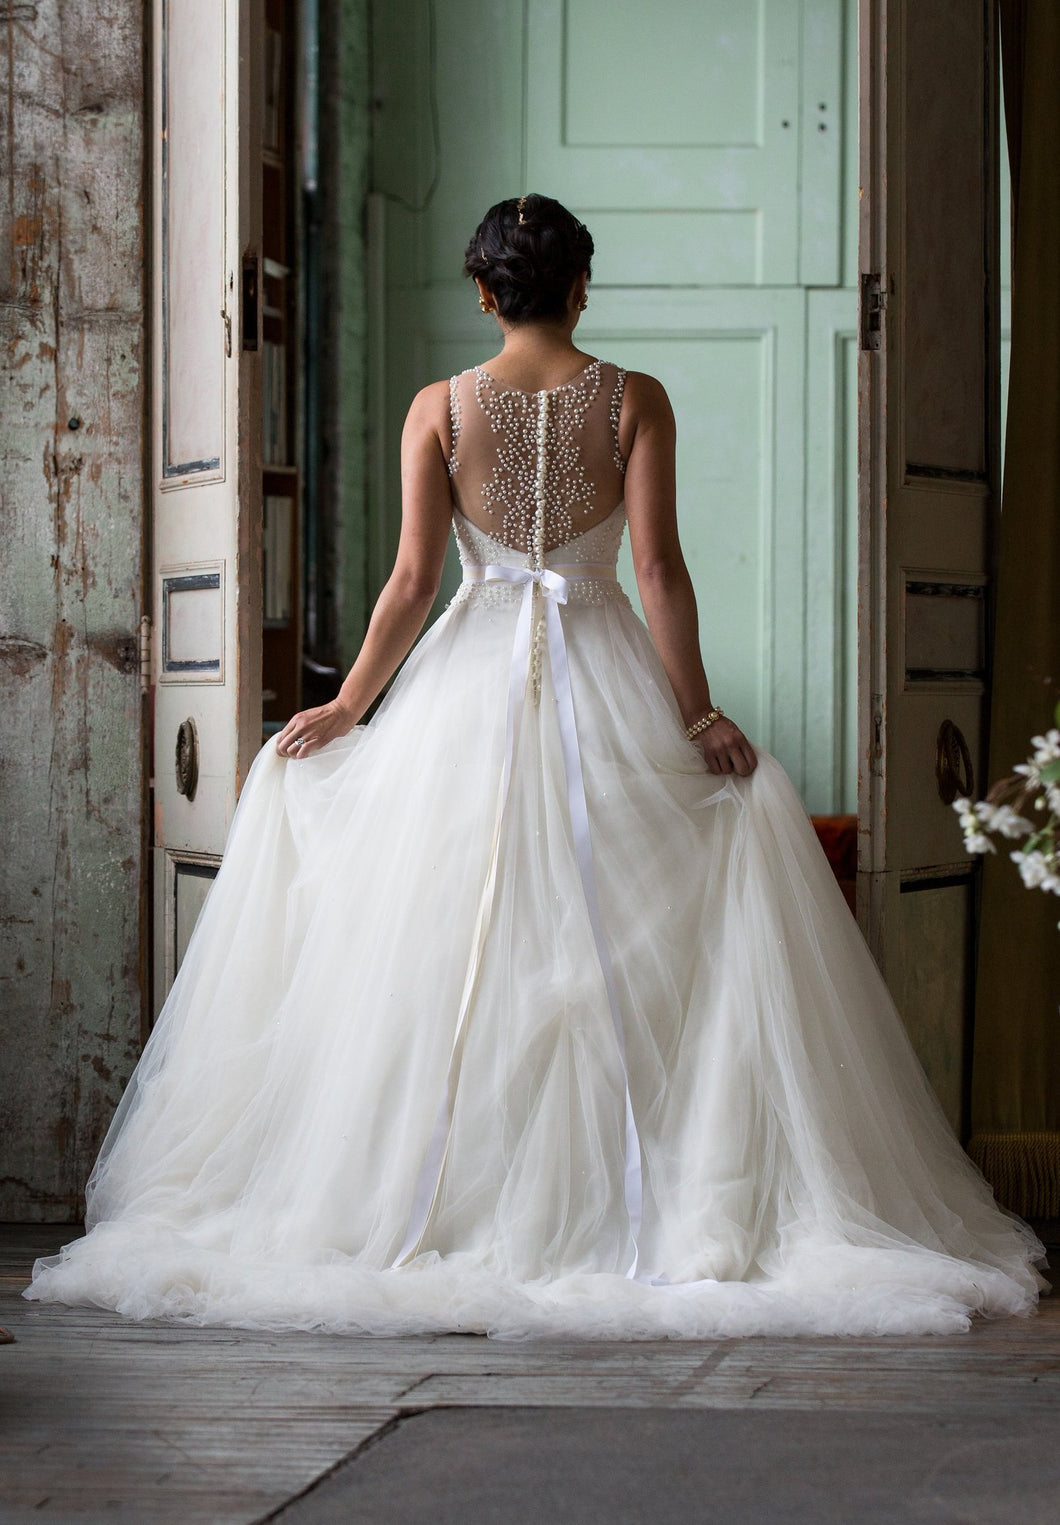 Veluz Reyes 'Karmina' size 4 sample wedding dress back view on model